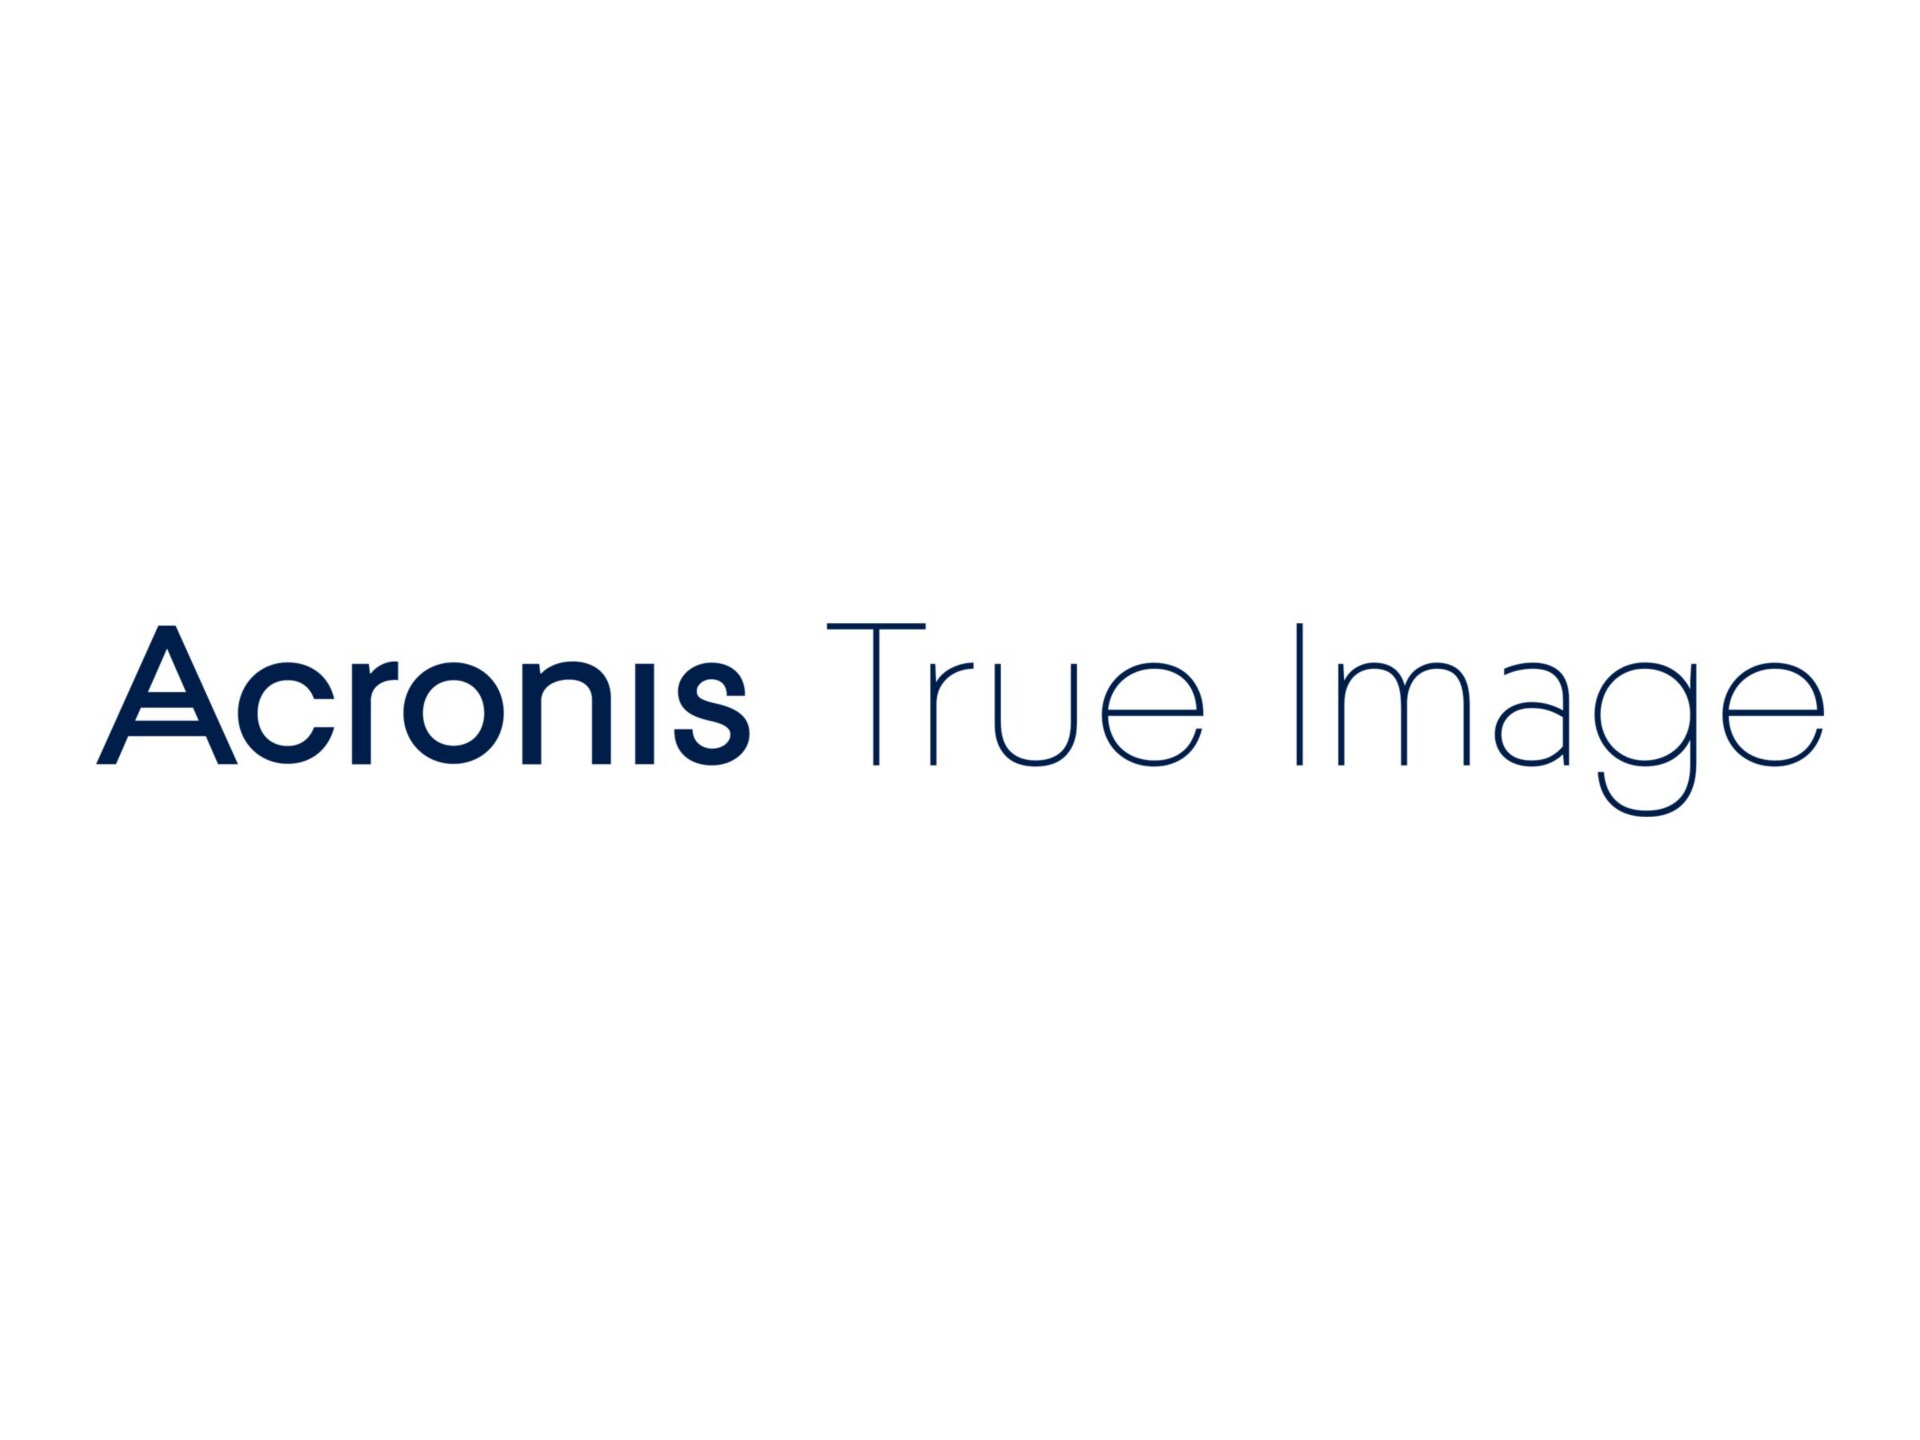 Acronis True Image Premium - subscription license (1 year) - 5 computers, 1 TB cloud storage space